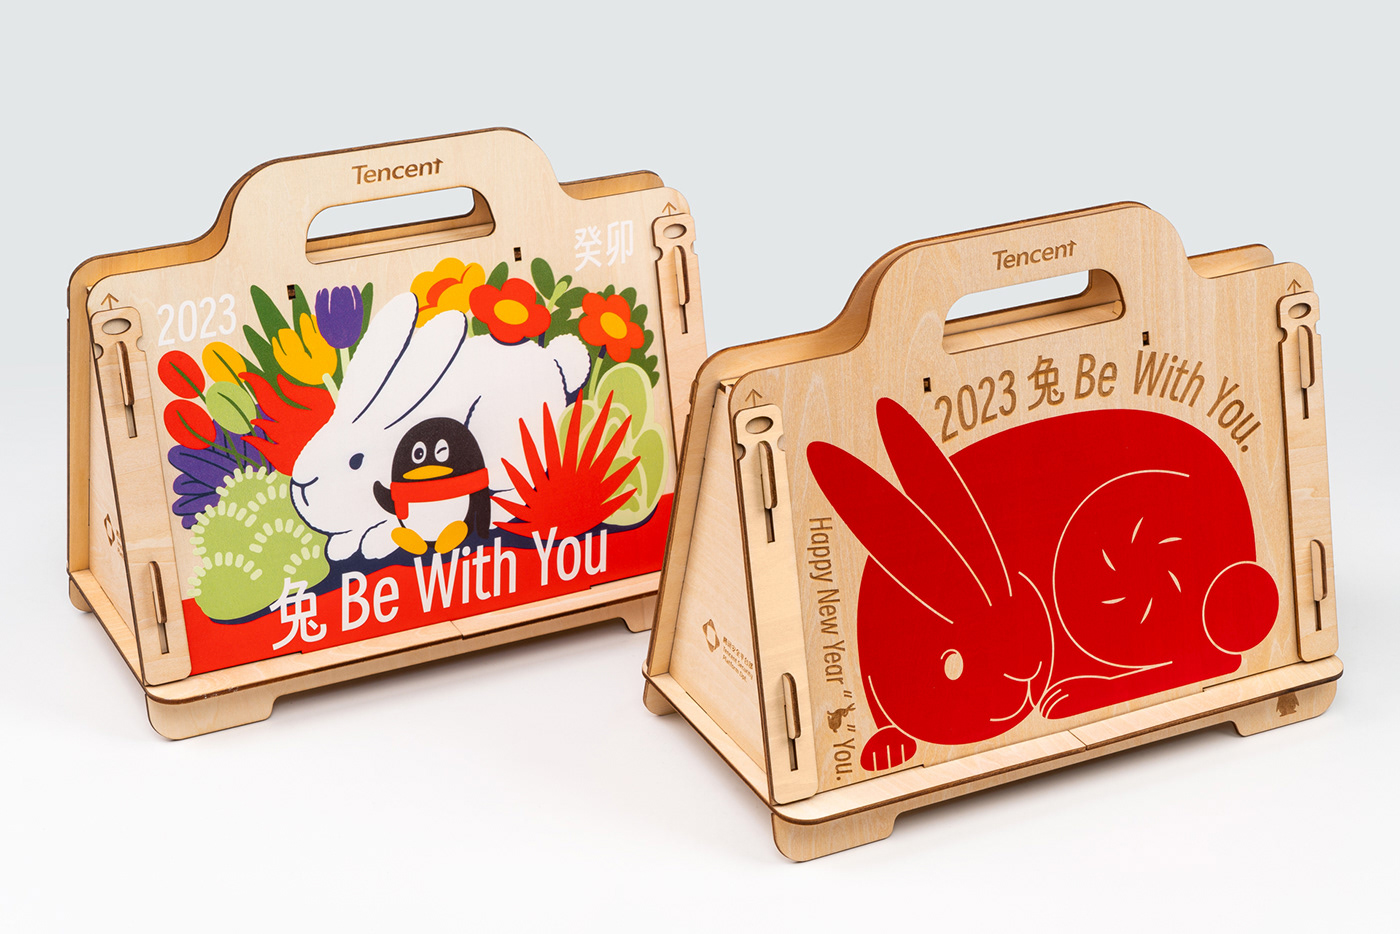 bag cny gift box new year Packaging 包装设计 新年礼品 environmental design graphics 环保设计